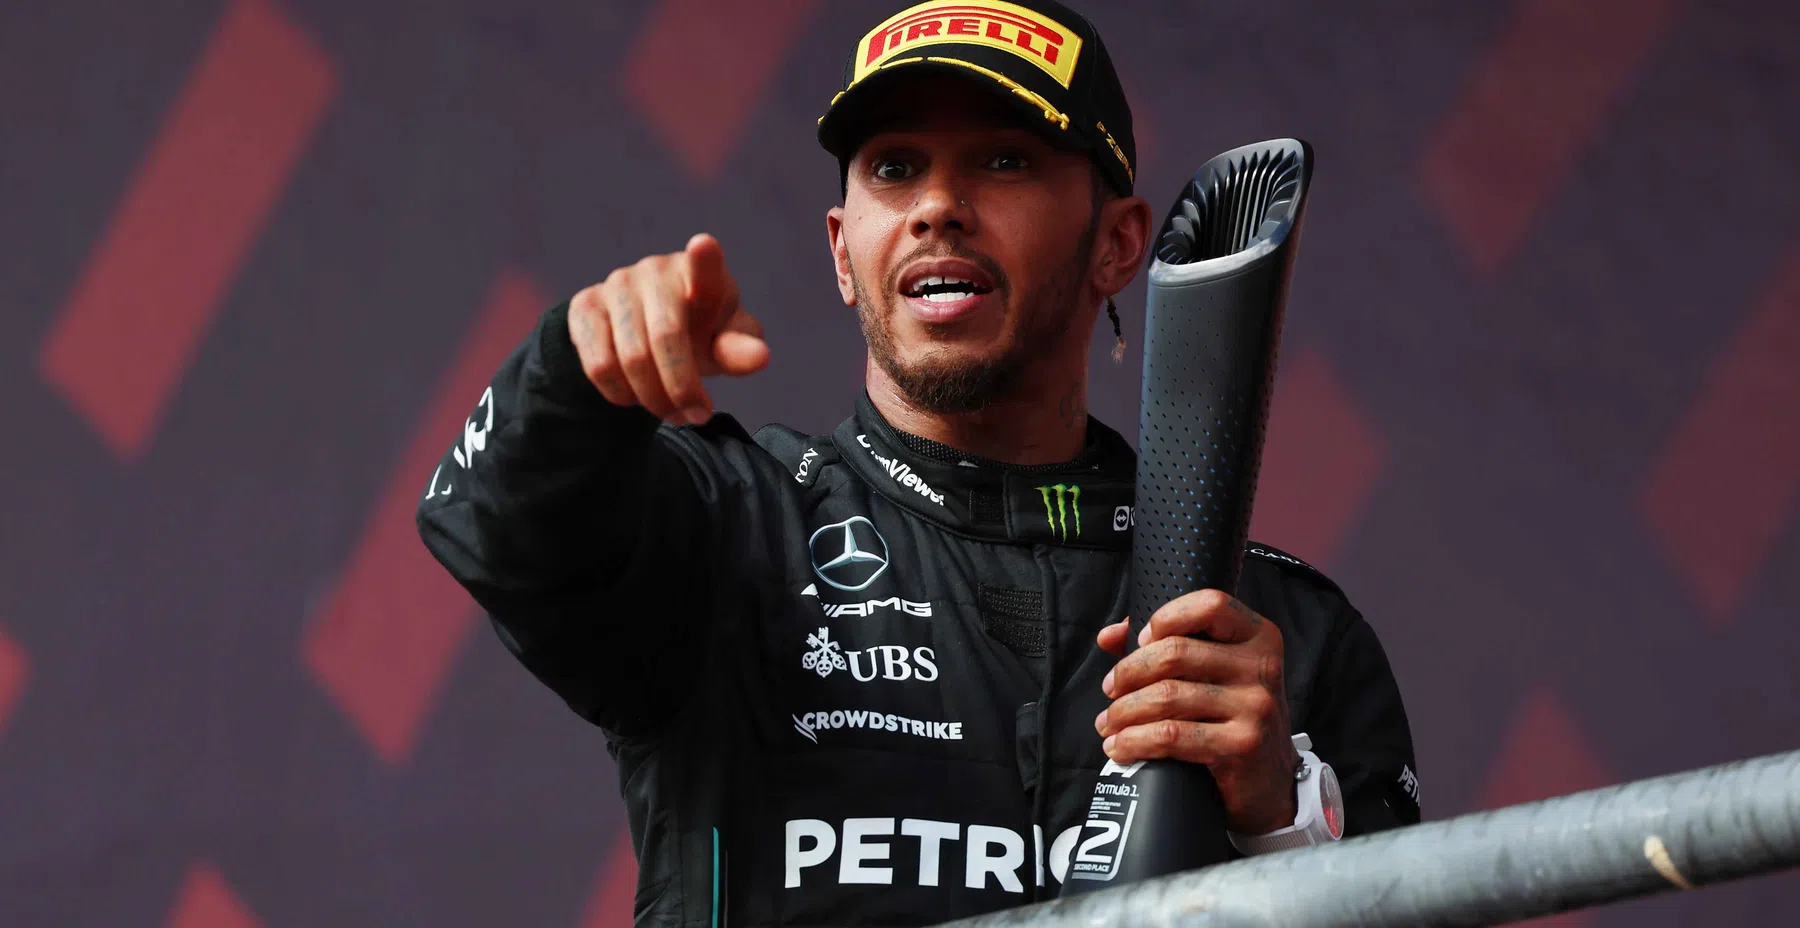 Hamilton saw chance to beat Verstappen